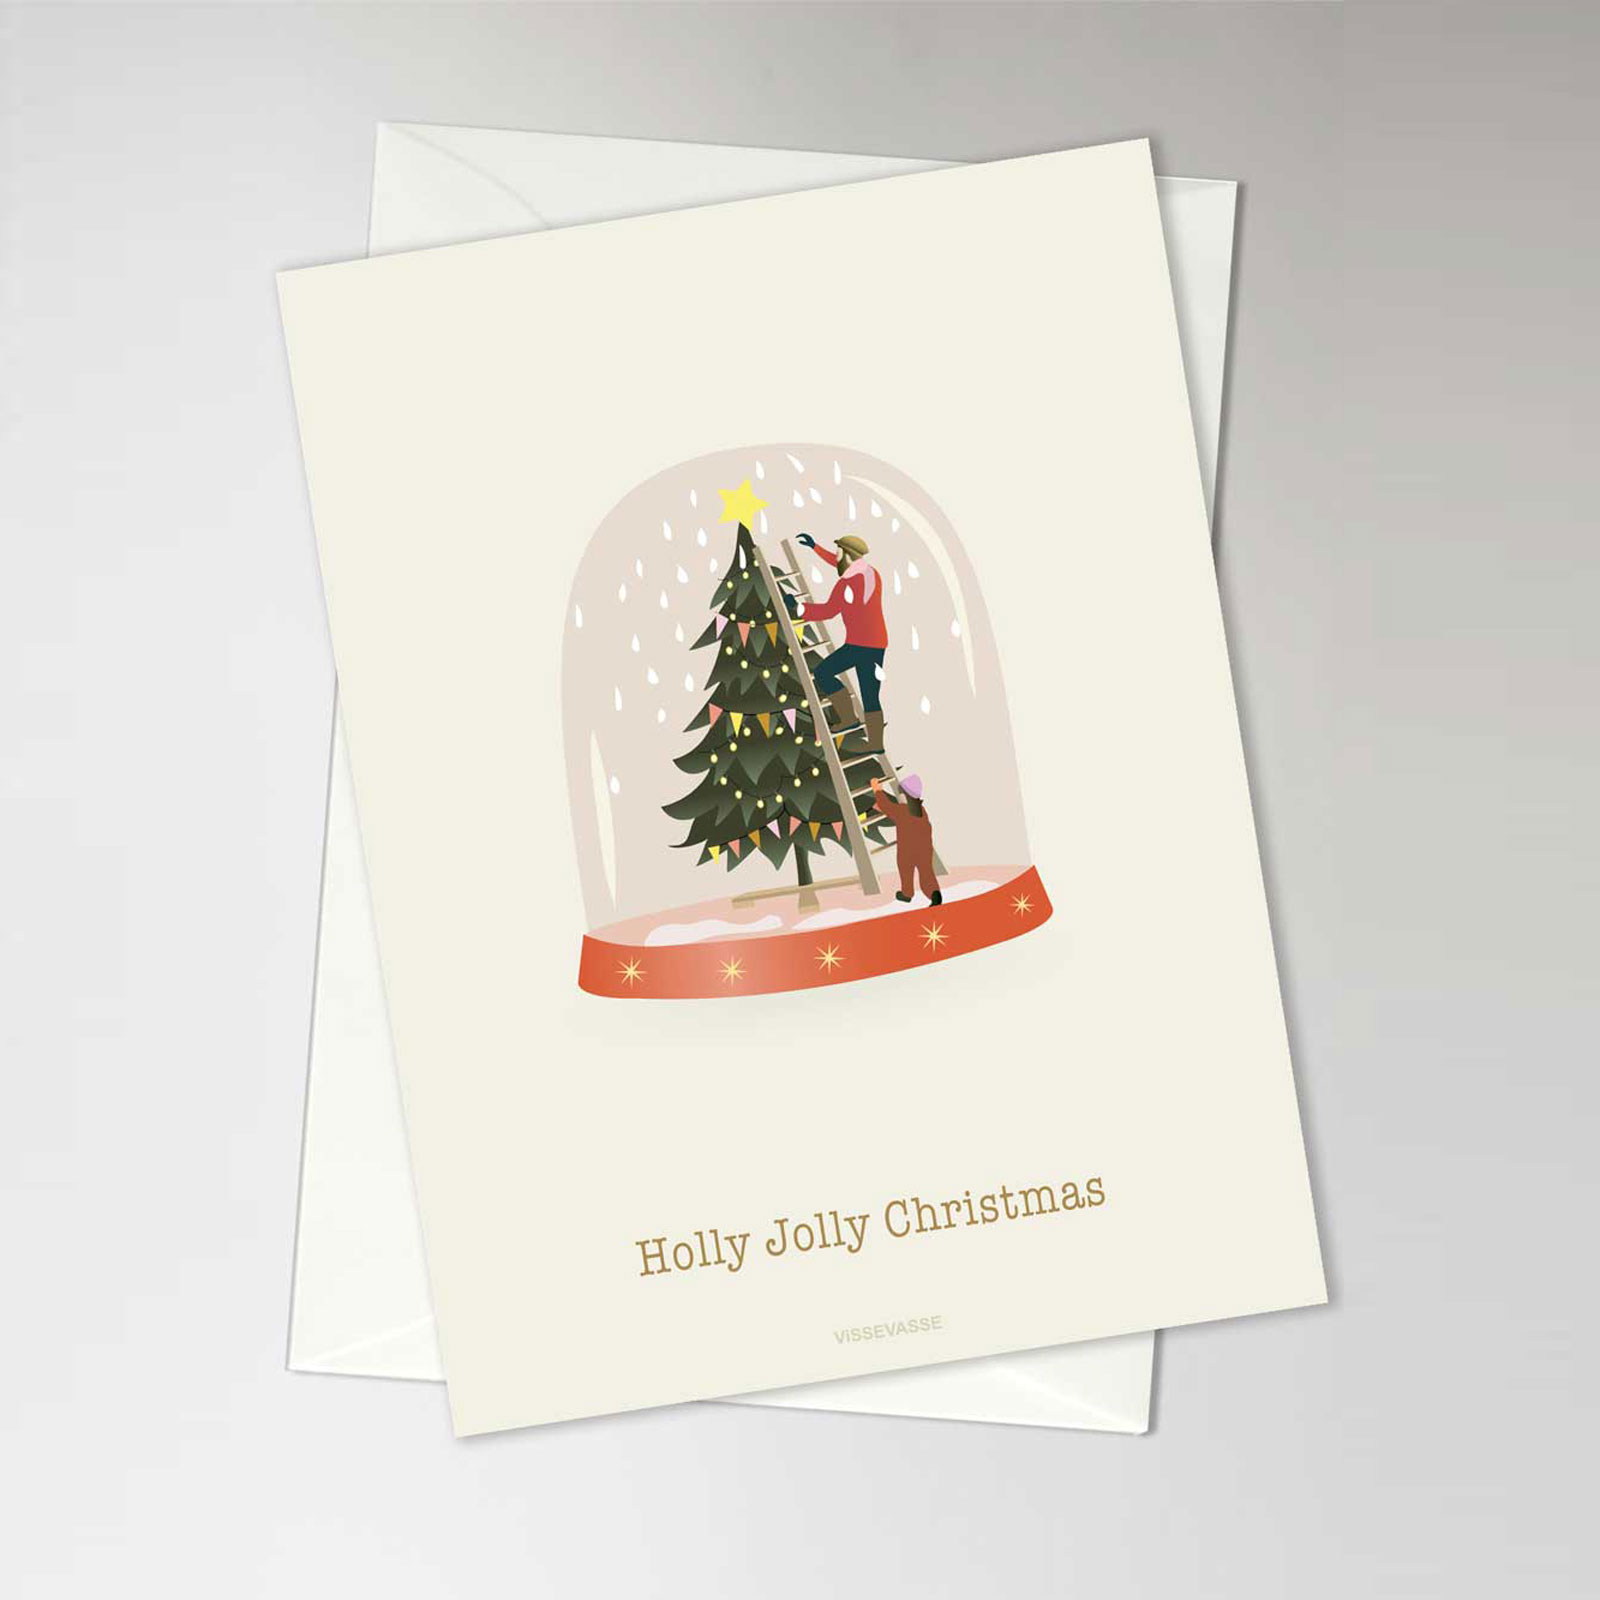 Greeting card HOLLY JOLLY CHRISTMAS 